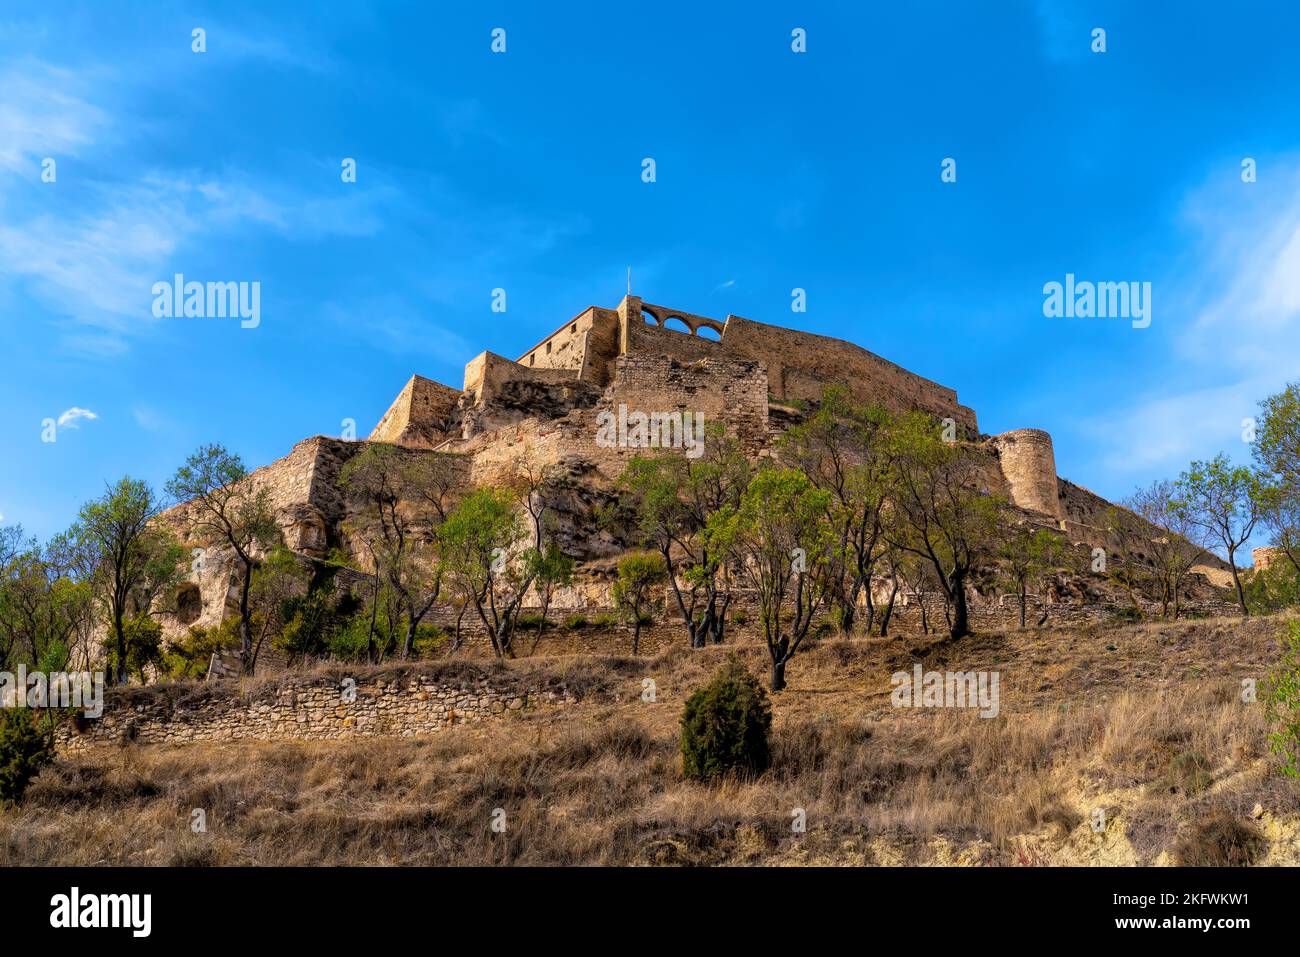 View up to Morella castle Castellon province Spain Stock Photo